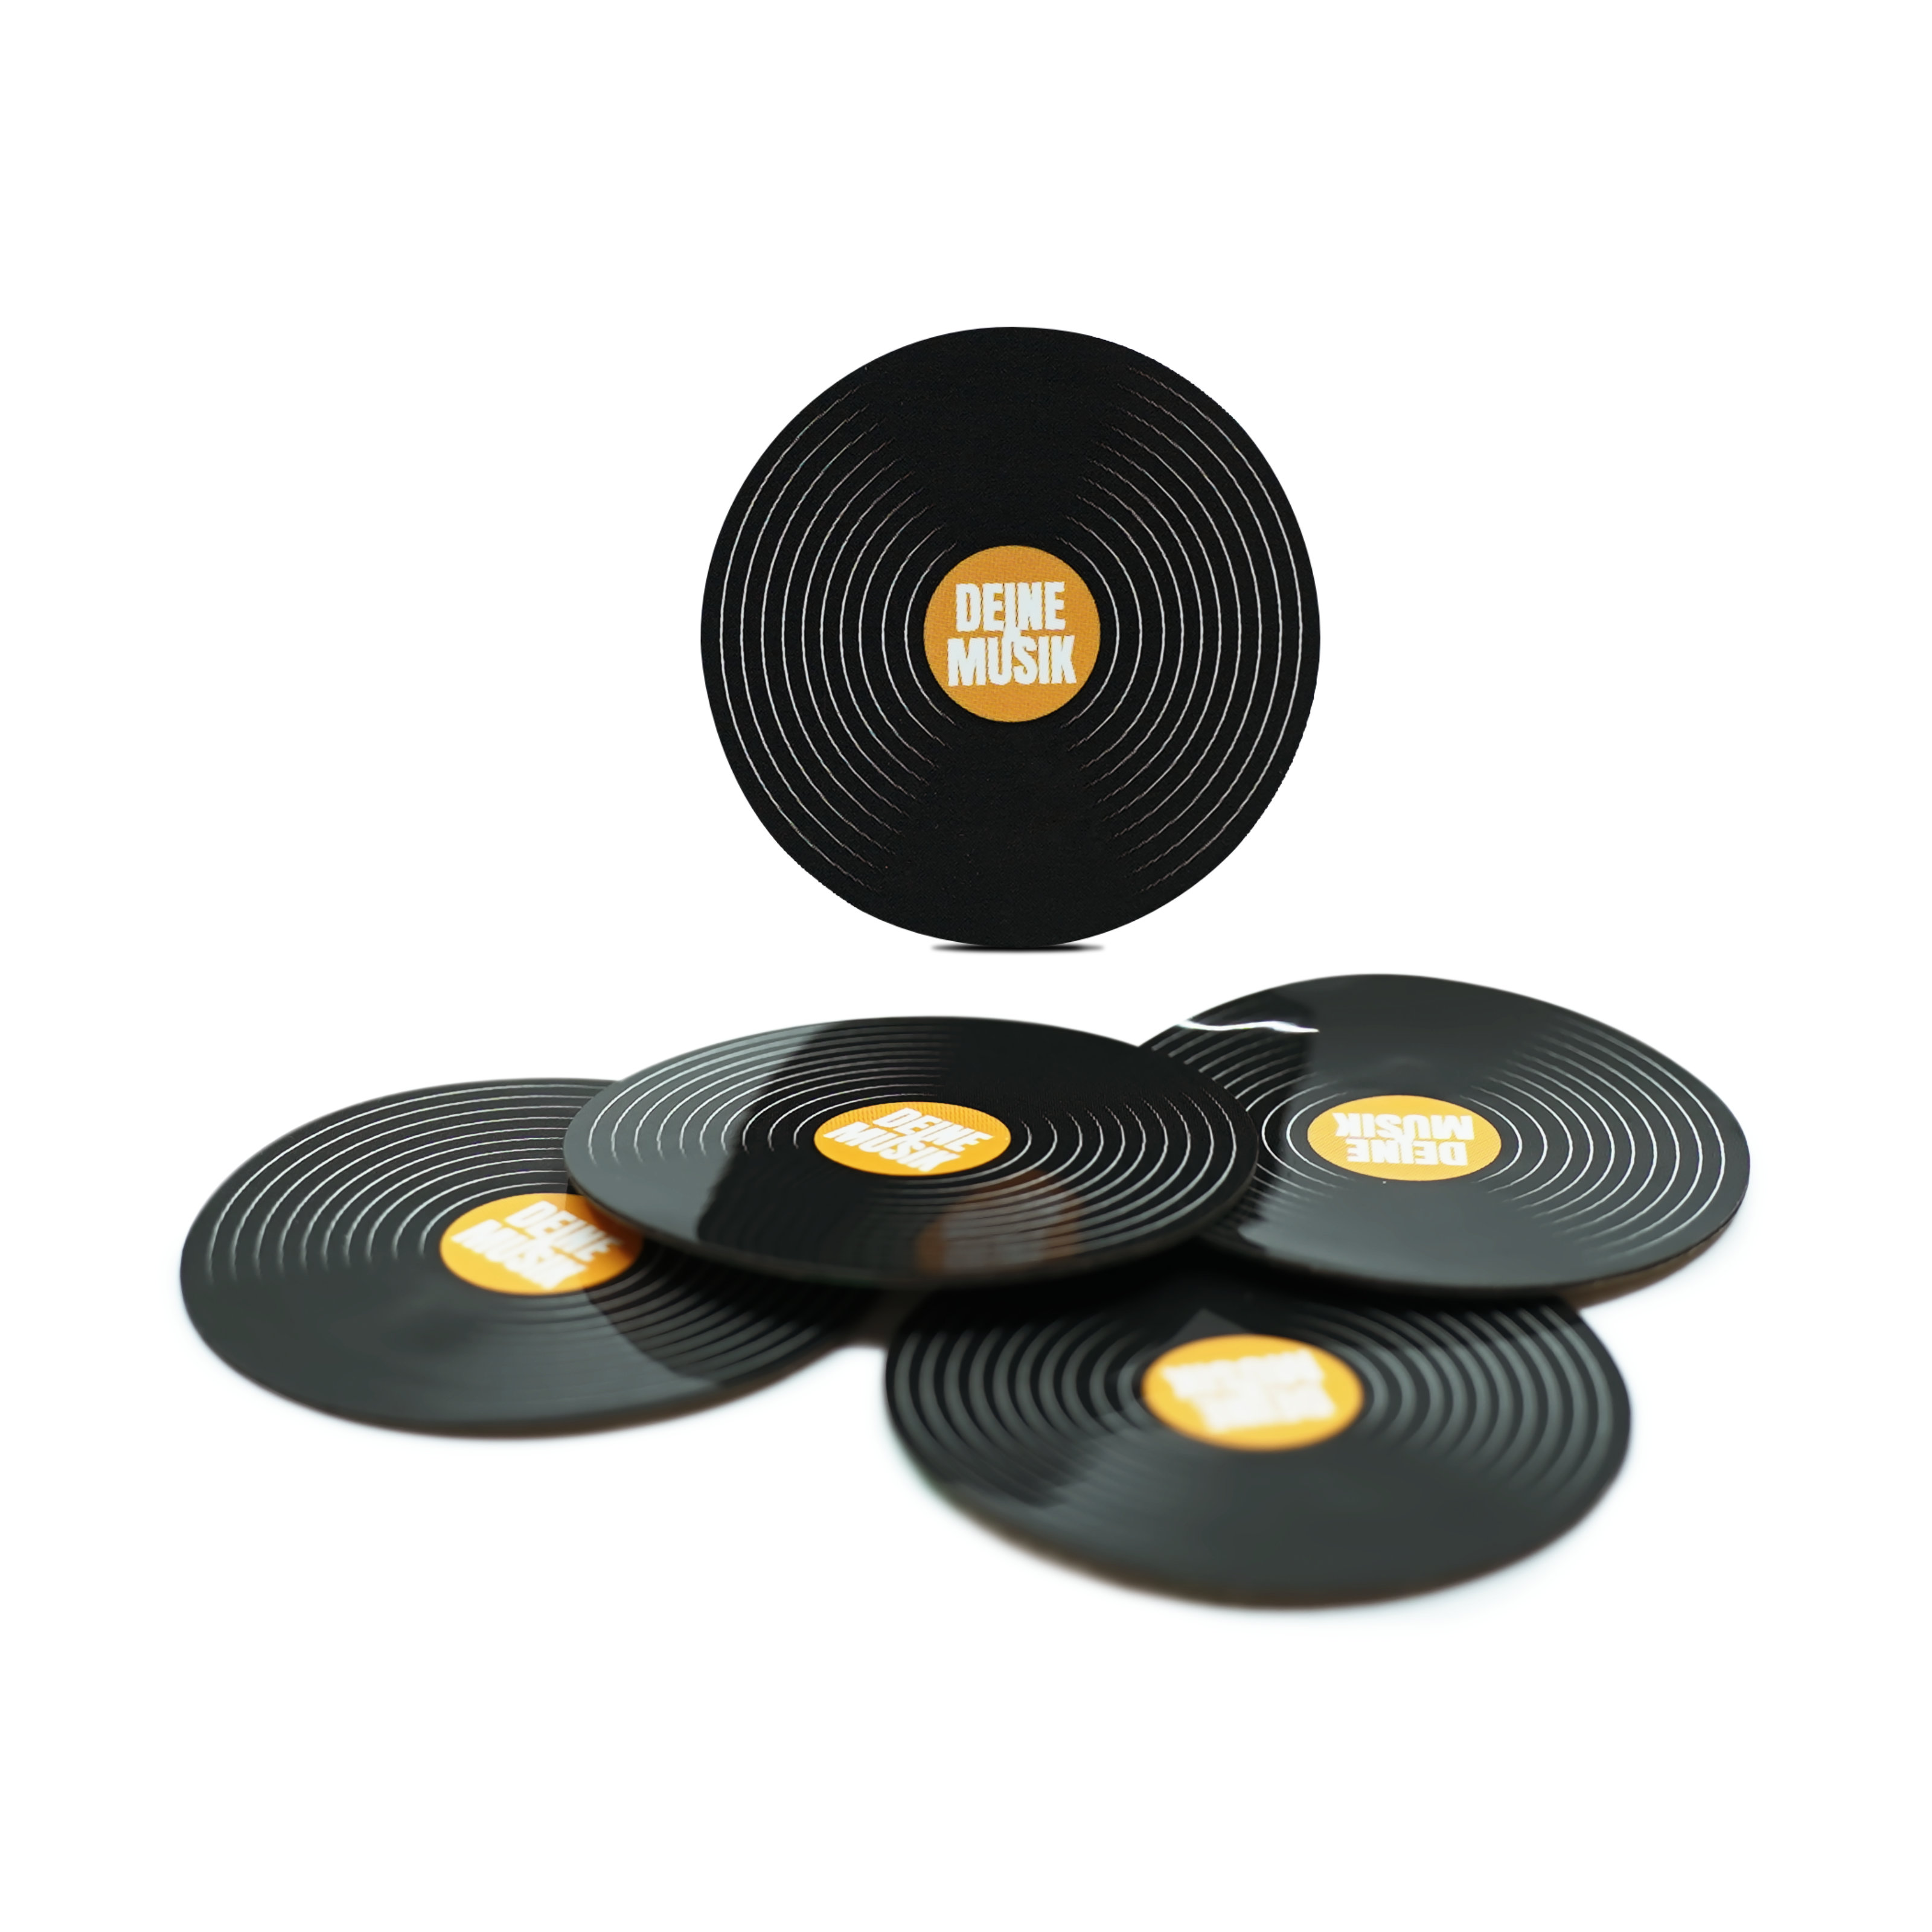  NFC Vibes Schallplatte - Digital music sticker - PET - 38 mm - black - german label